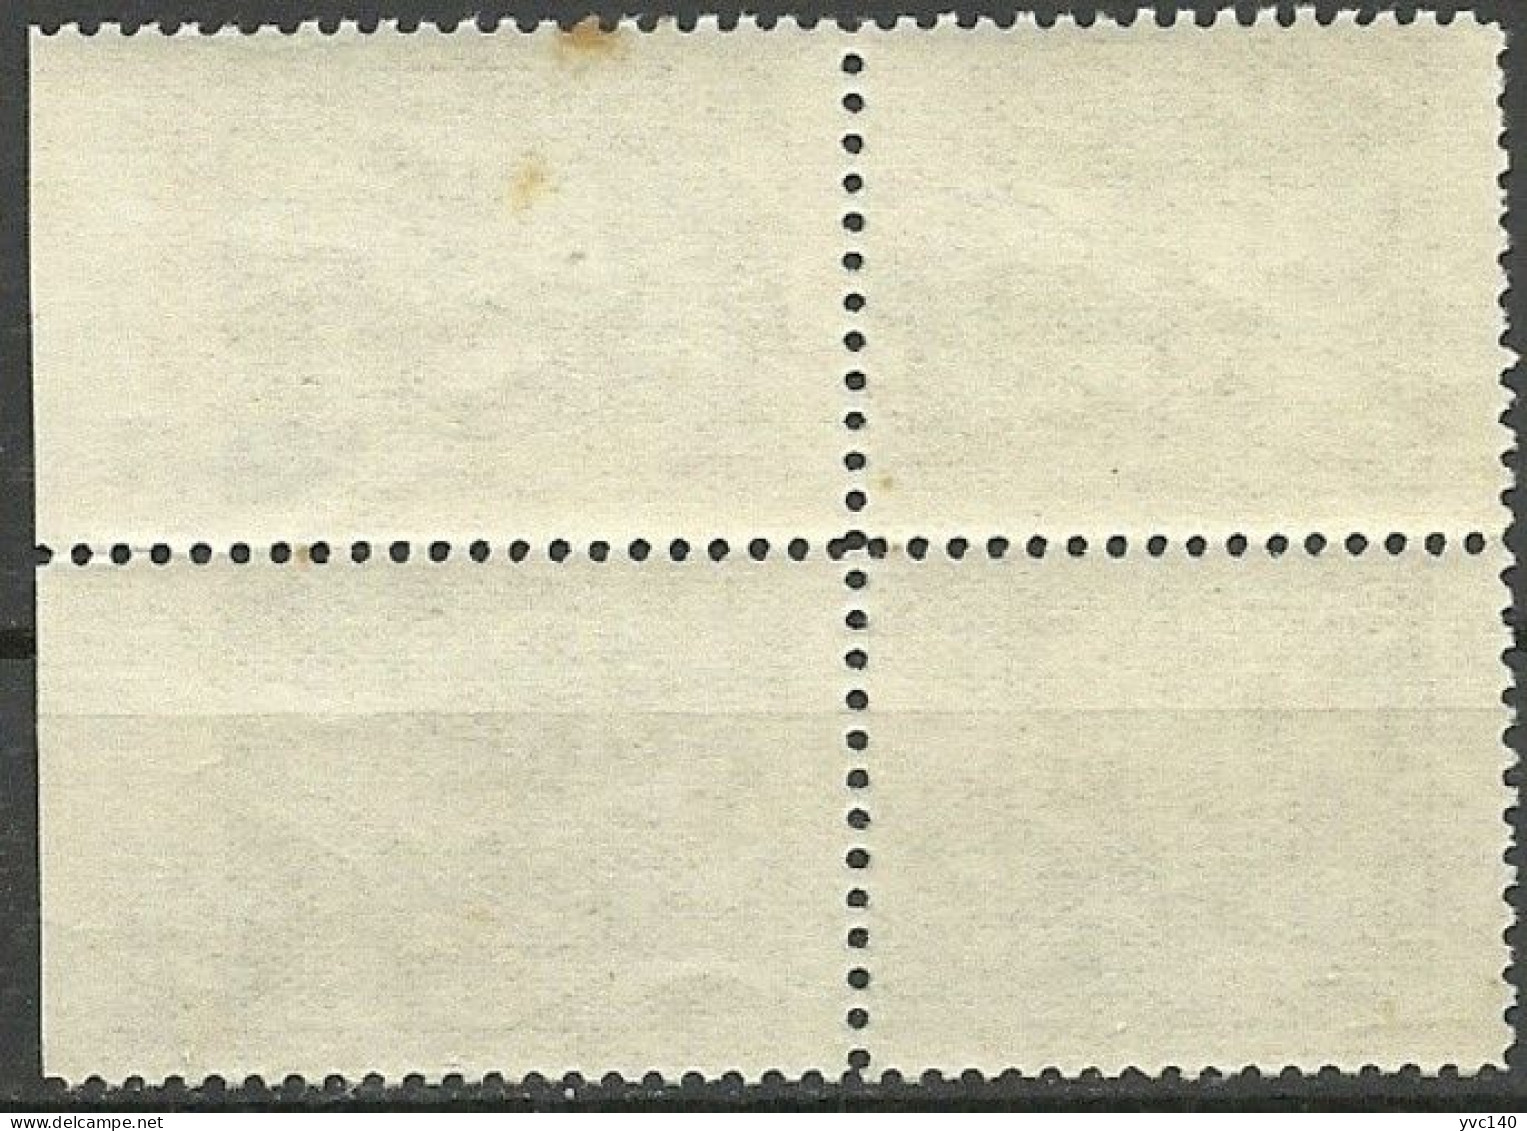 Turkey; 1959 Pictorial Postage Stamp 1 K. ERROR "Imperf. Edge" - Unused Stamps